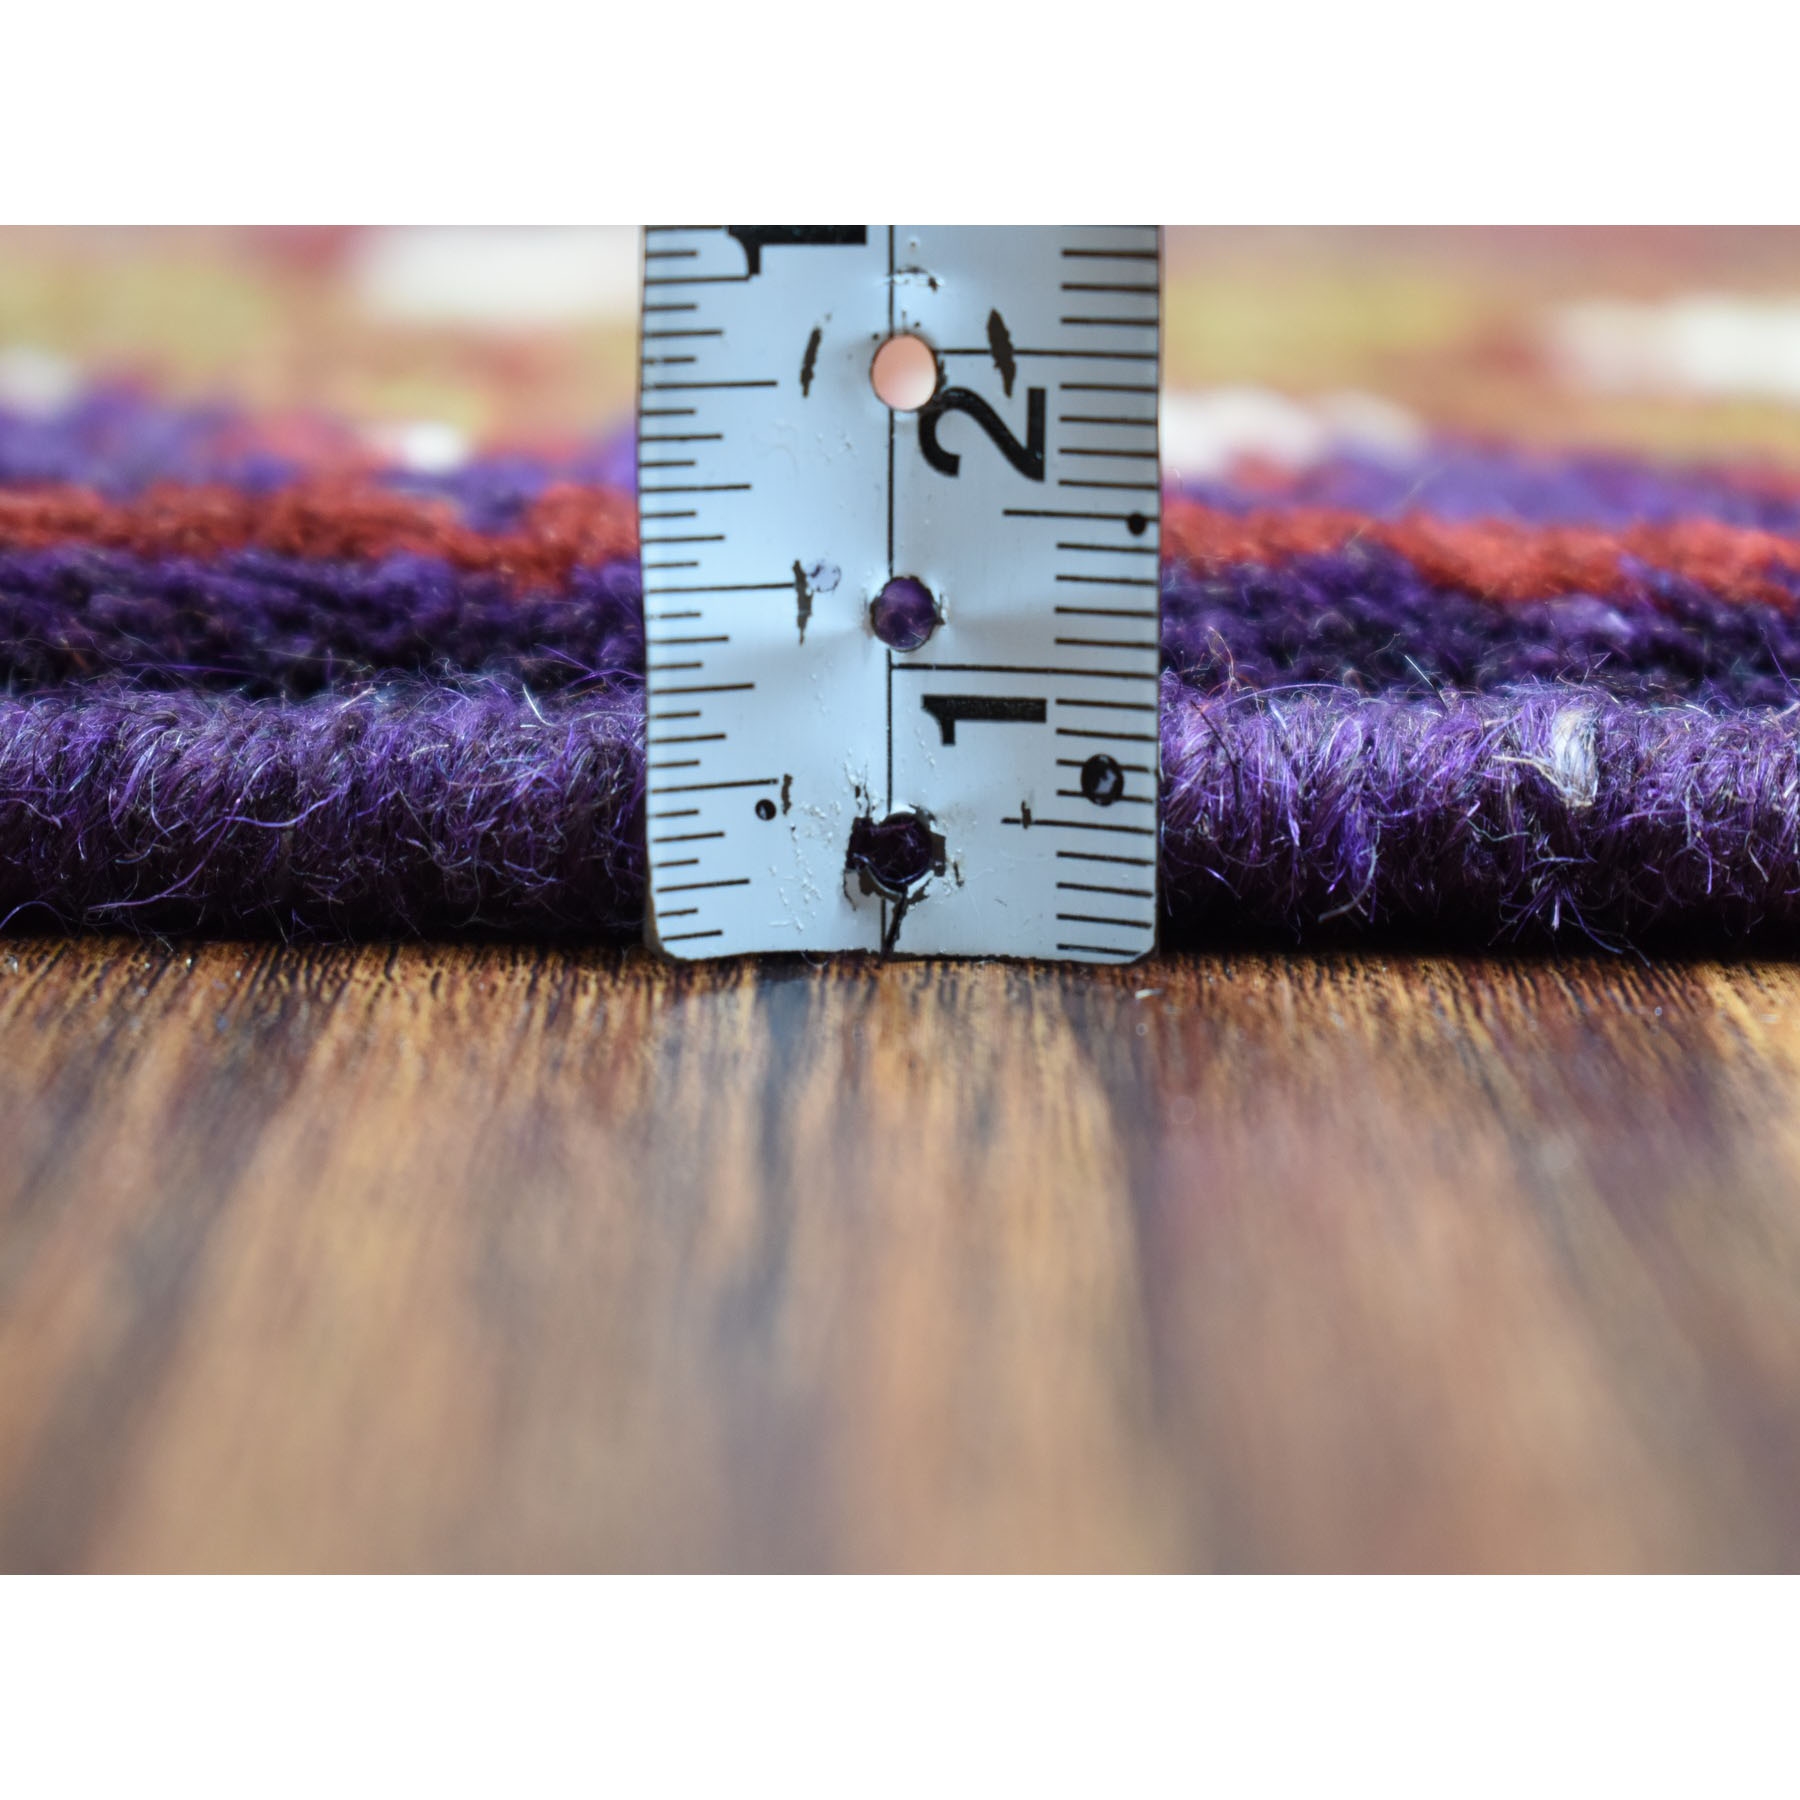 6'8"x9'5" Purple Elephant Feet Design Colorful Afghan Baluch Hand Woven Pure Wool Oriental Rug 